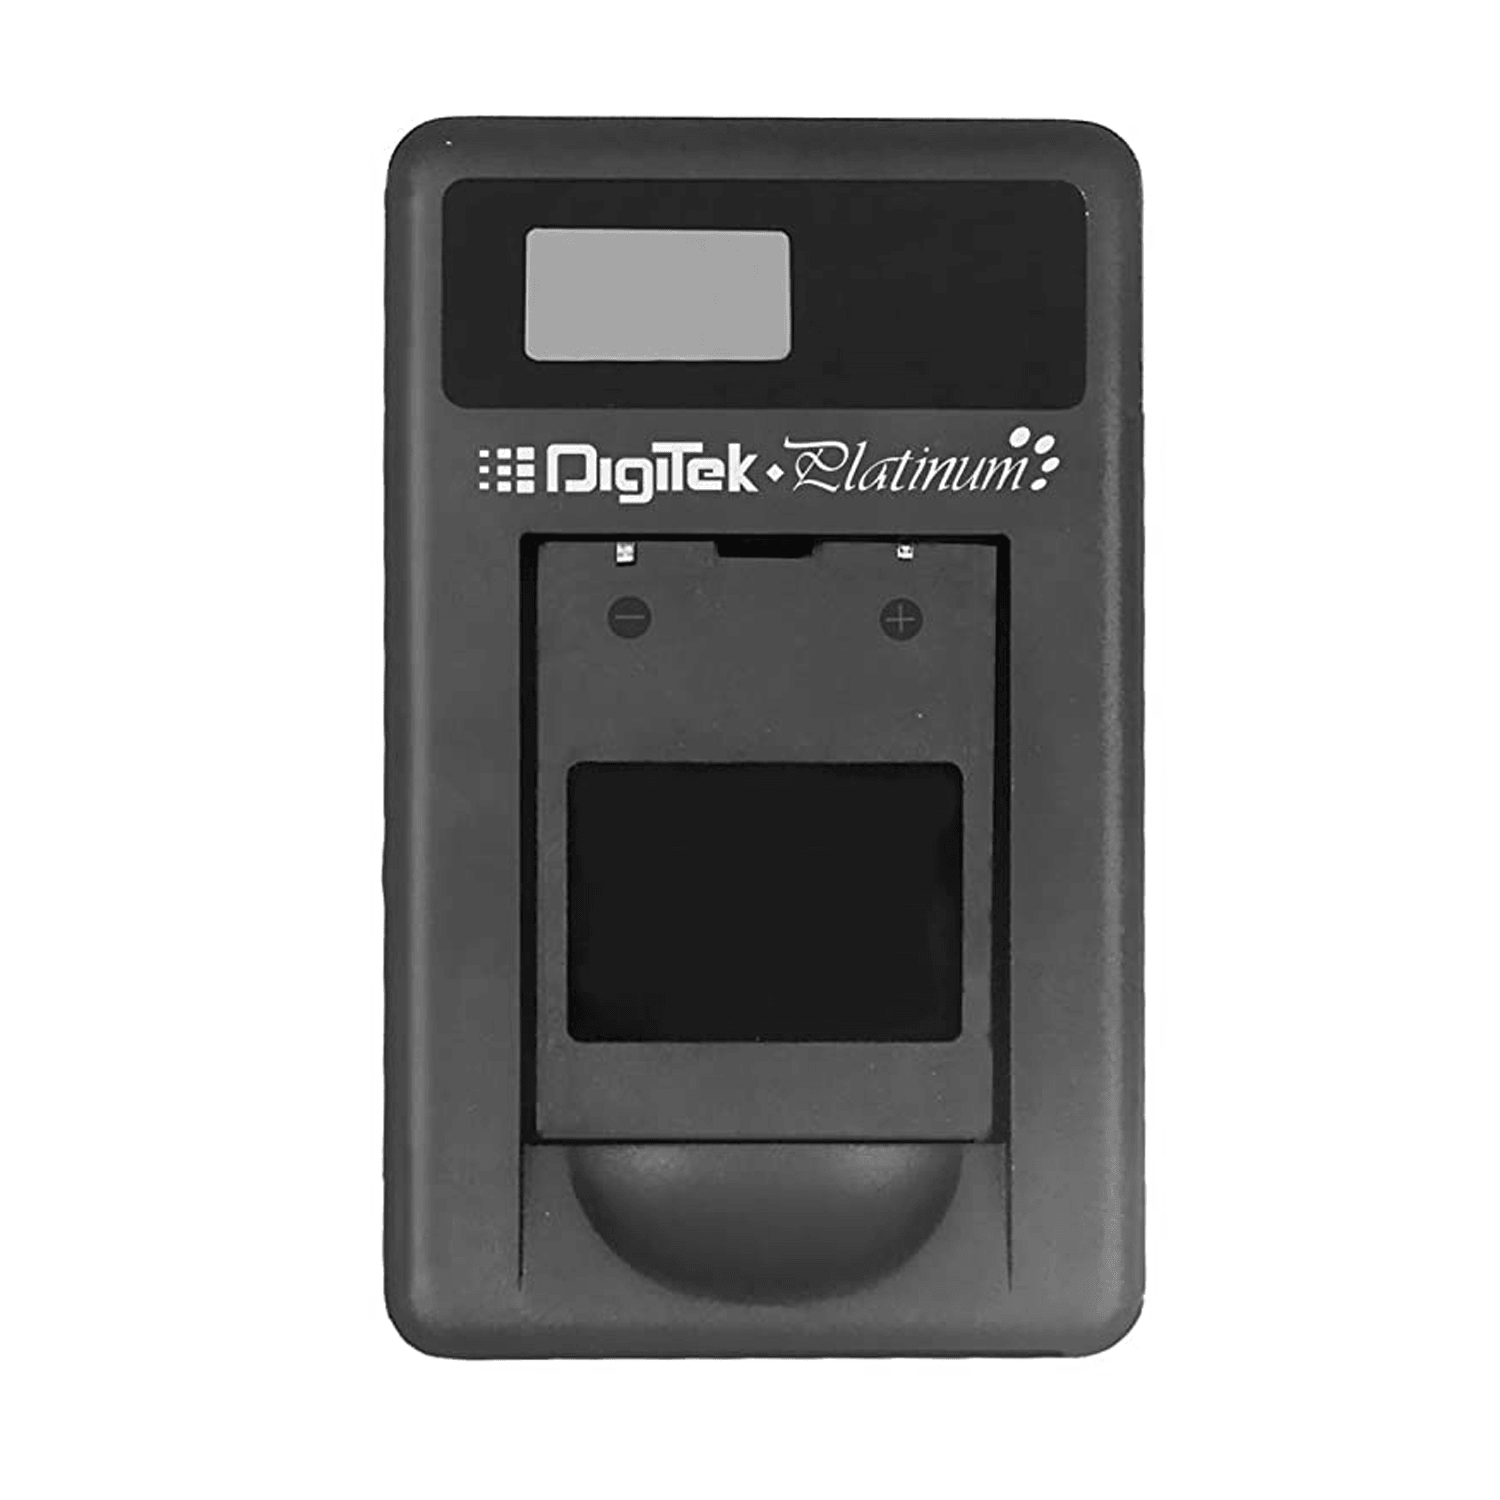 Digitek (DPUC 012S (LCD MU)) Platinum Charger DPUC 012S (LCD MU) LPE10 for LPE10 Battery - Digitek